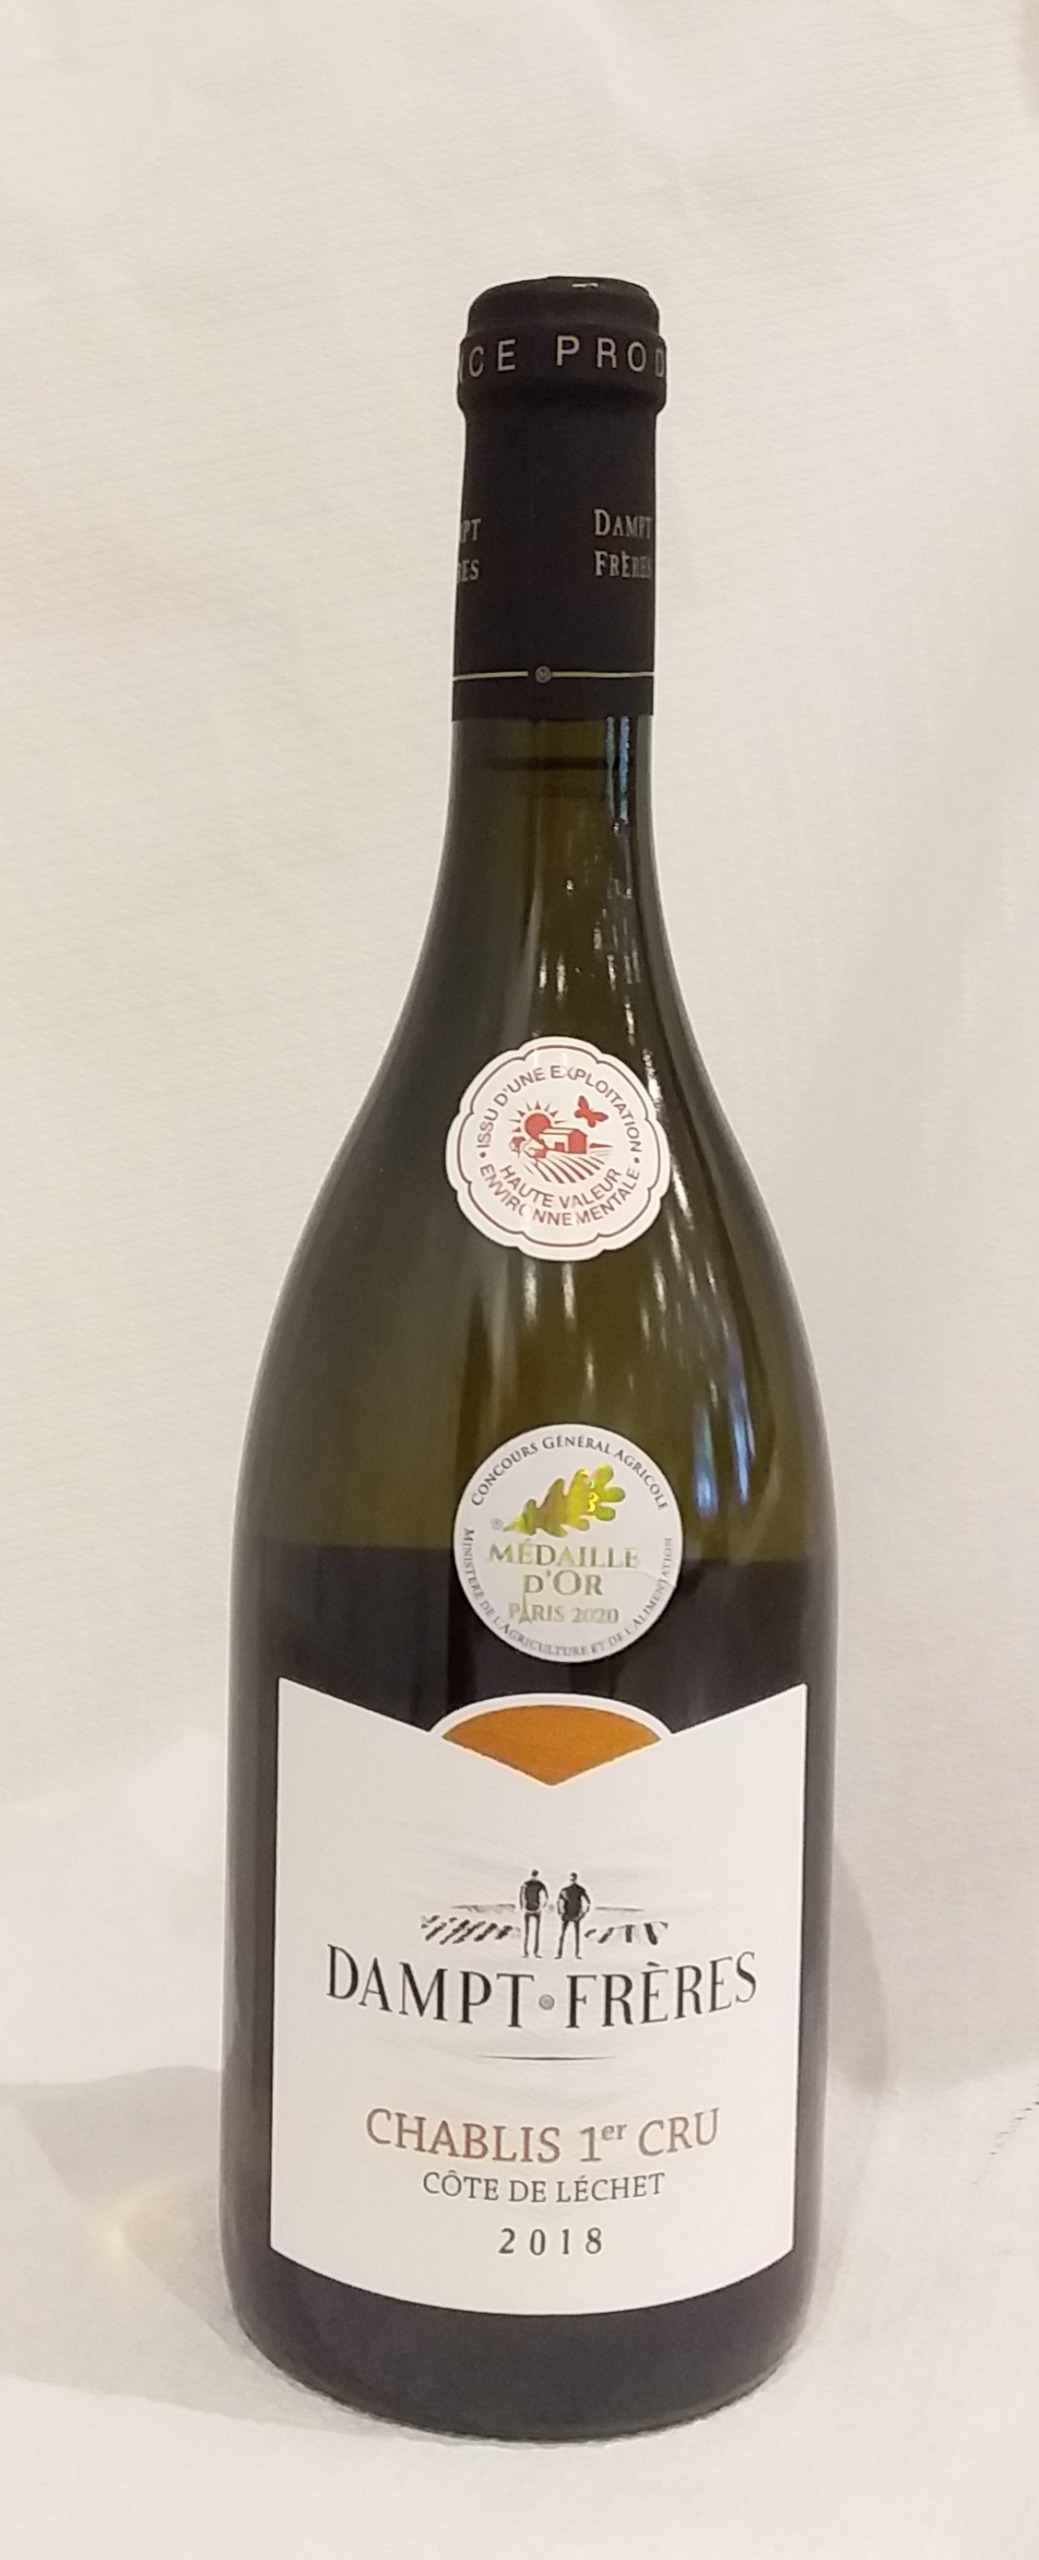 Vin blanc sec - Chablis 1er cru - Domaine Drampt Frères - 2018